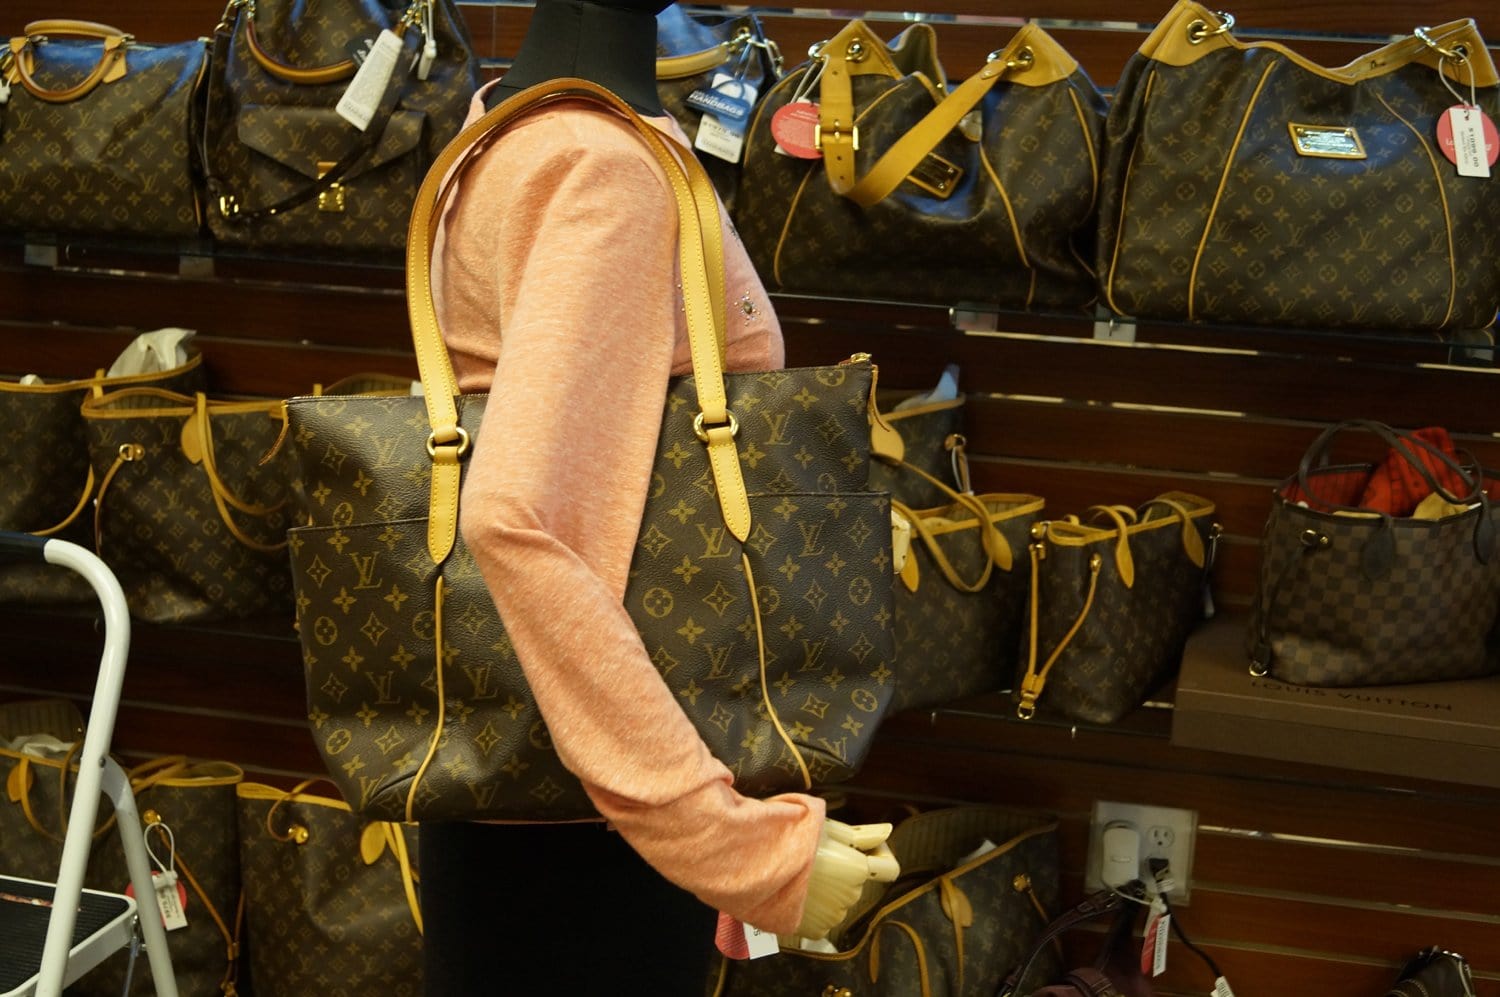 tas tote-bag Louis Vuitton Monogram Totally GM Tote Bag